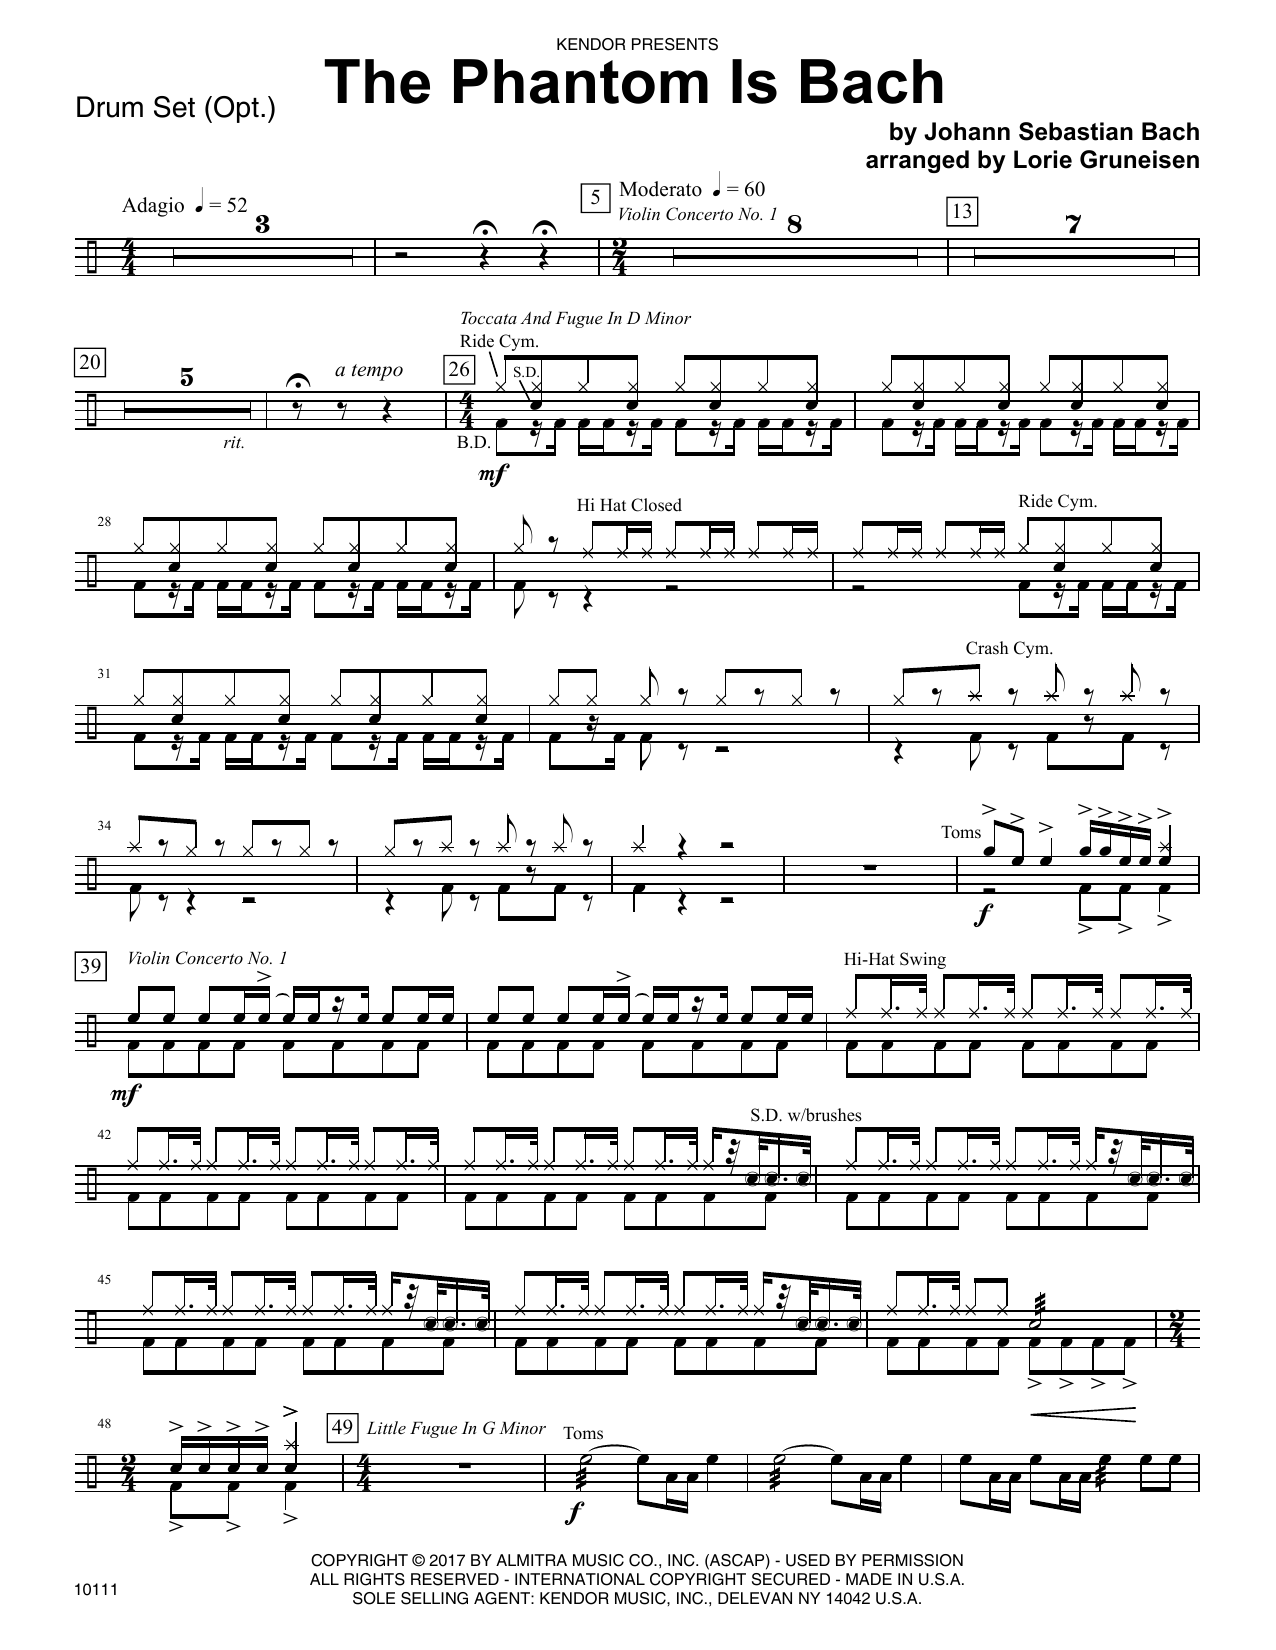 Download Lorie Gruneisen The Phantom Is Bach - Drum Set Sheet Music